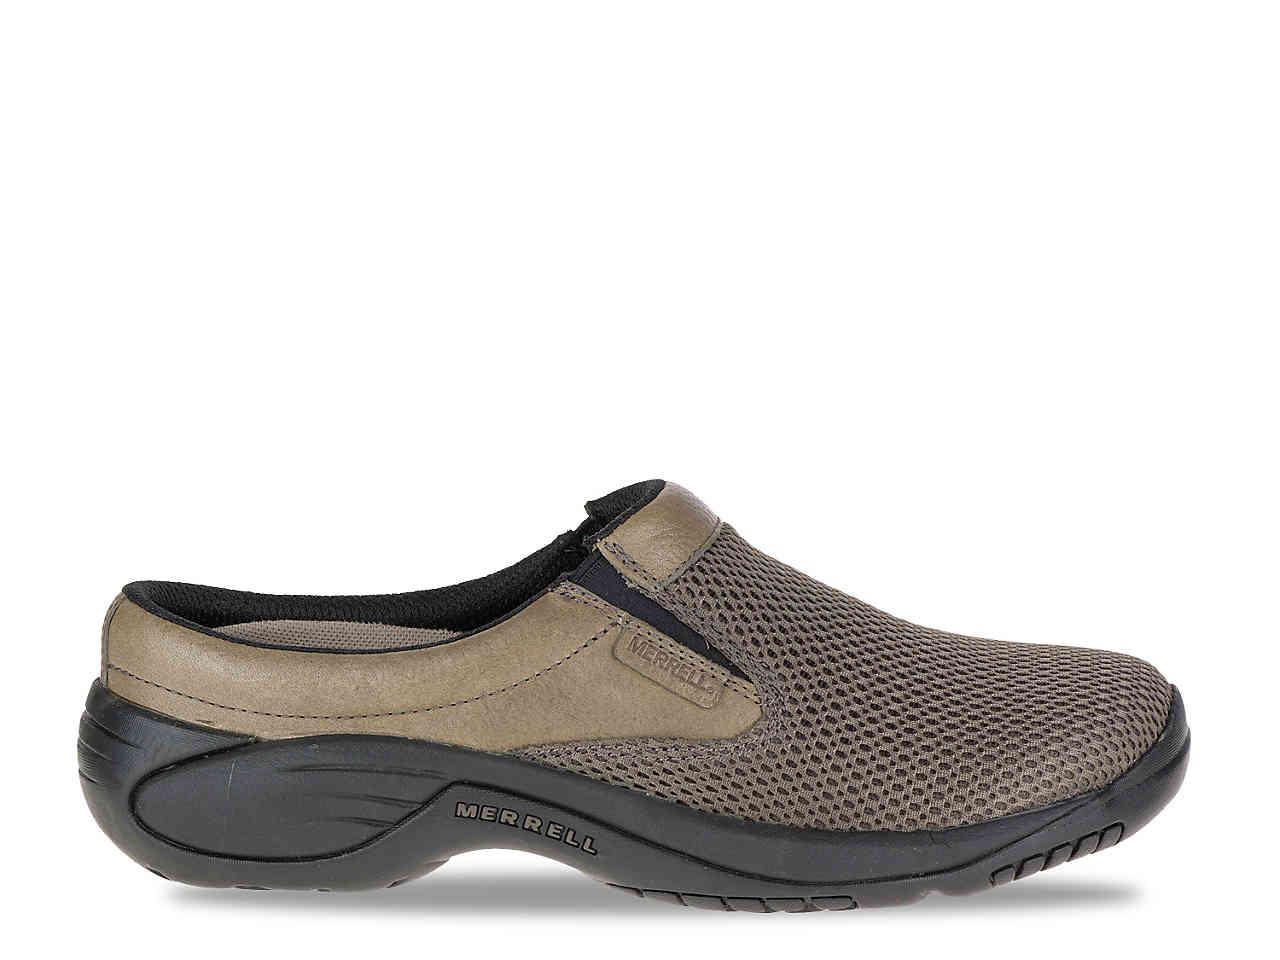 Merrell Leather Encore Bypass Slip-on Shoe in Grey (Gray) for Men - Lyst